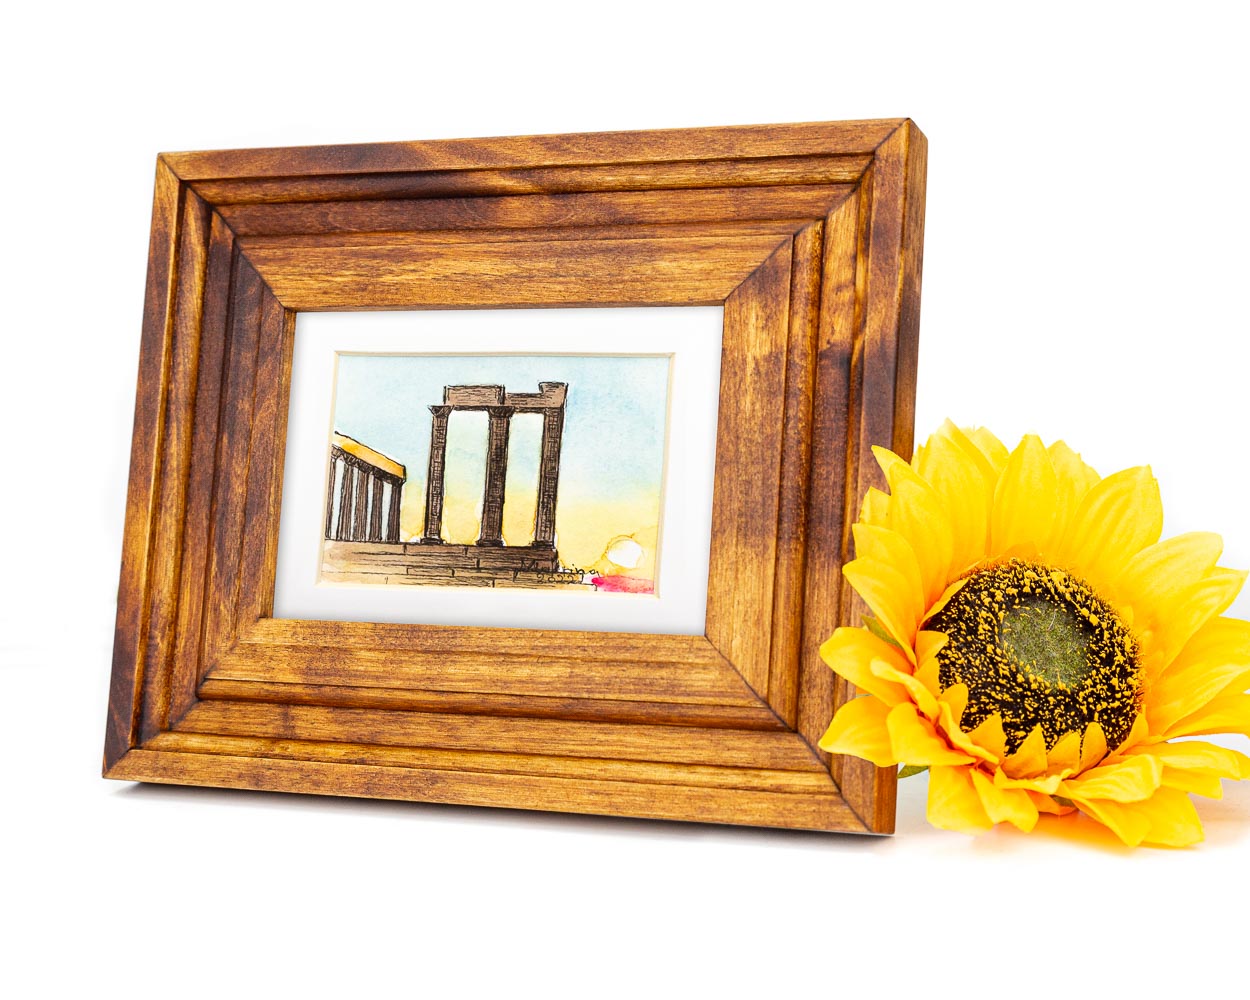 Honey Brown Vintage Design Photo Frame from Solid Birch Hardwood 2 inch wide